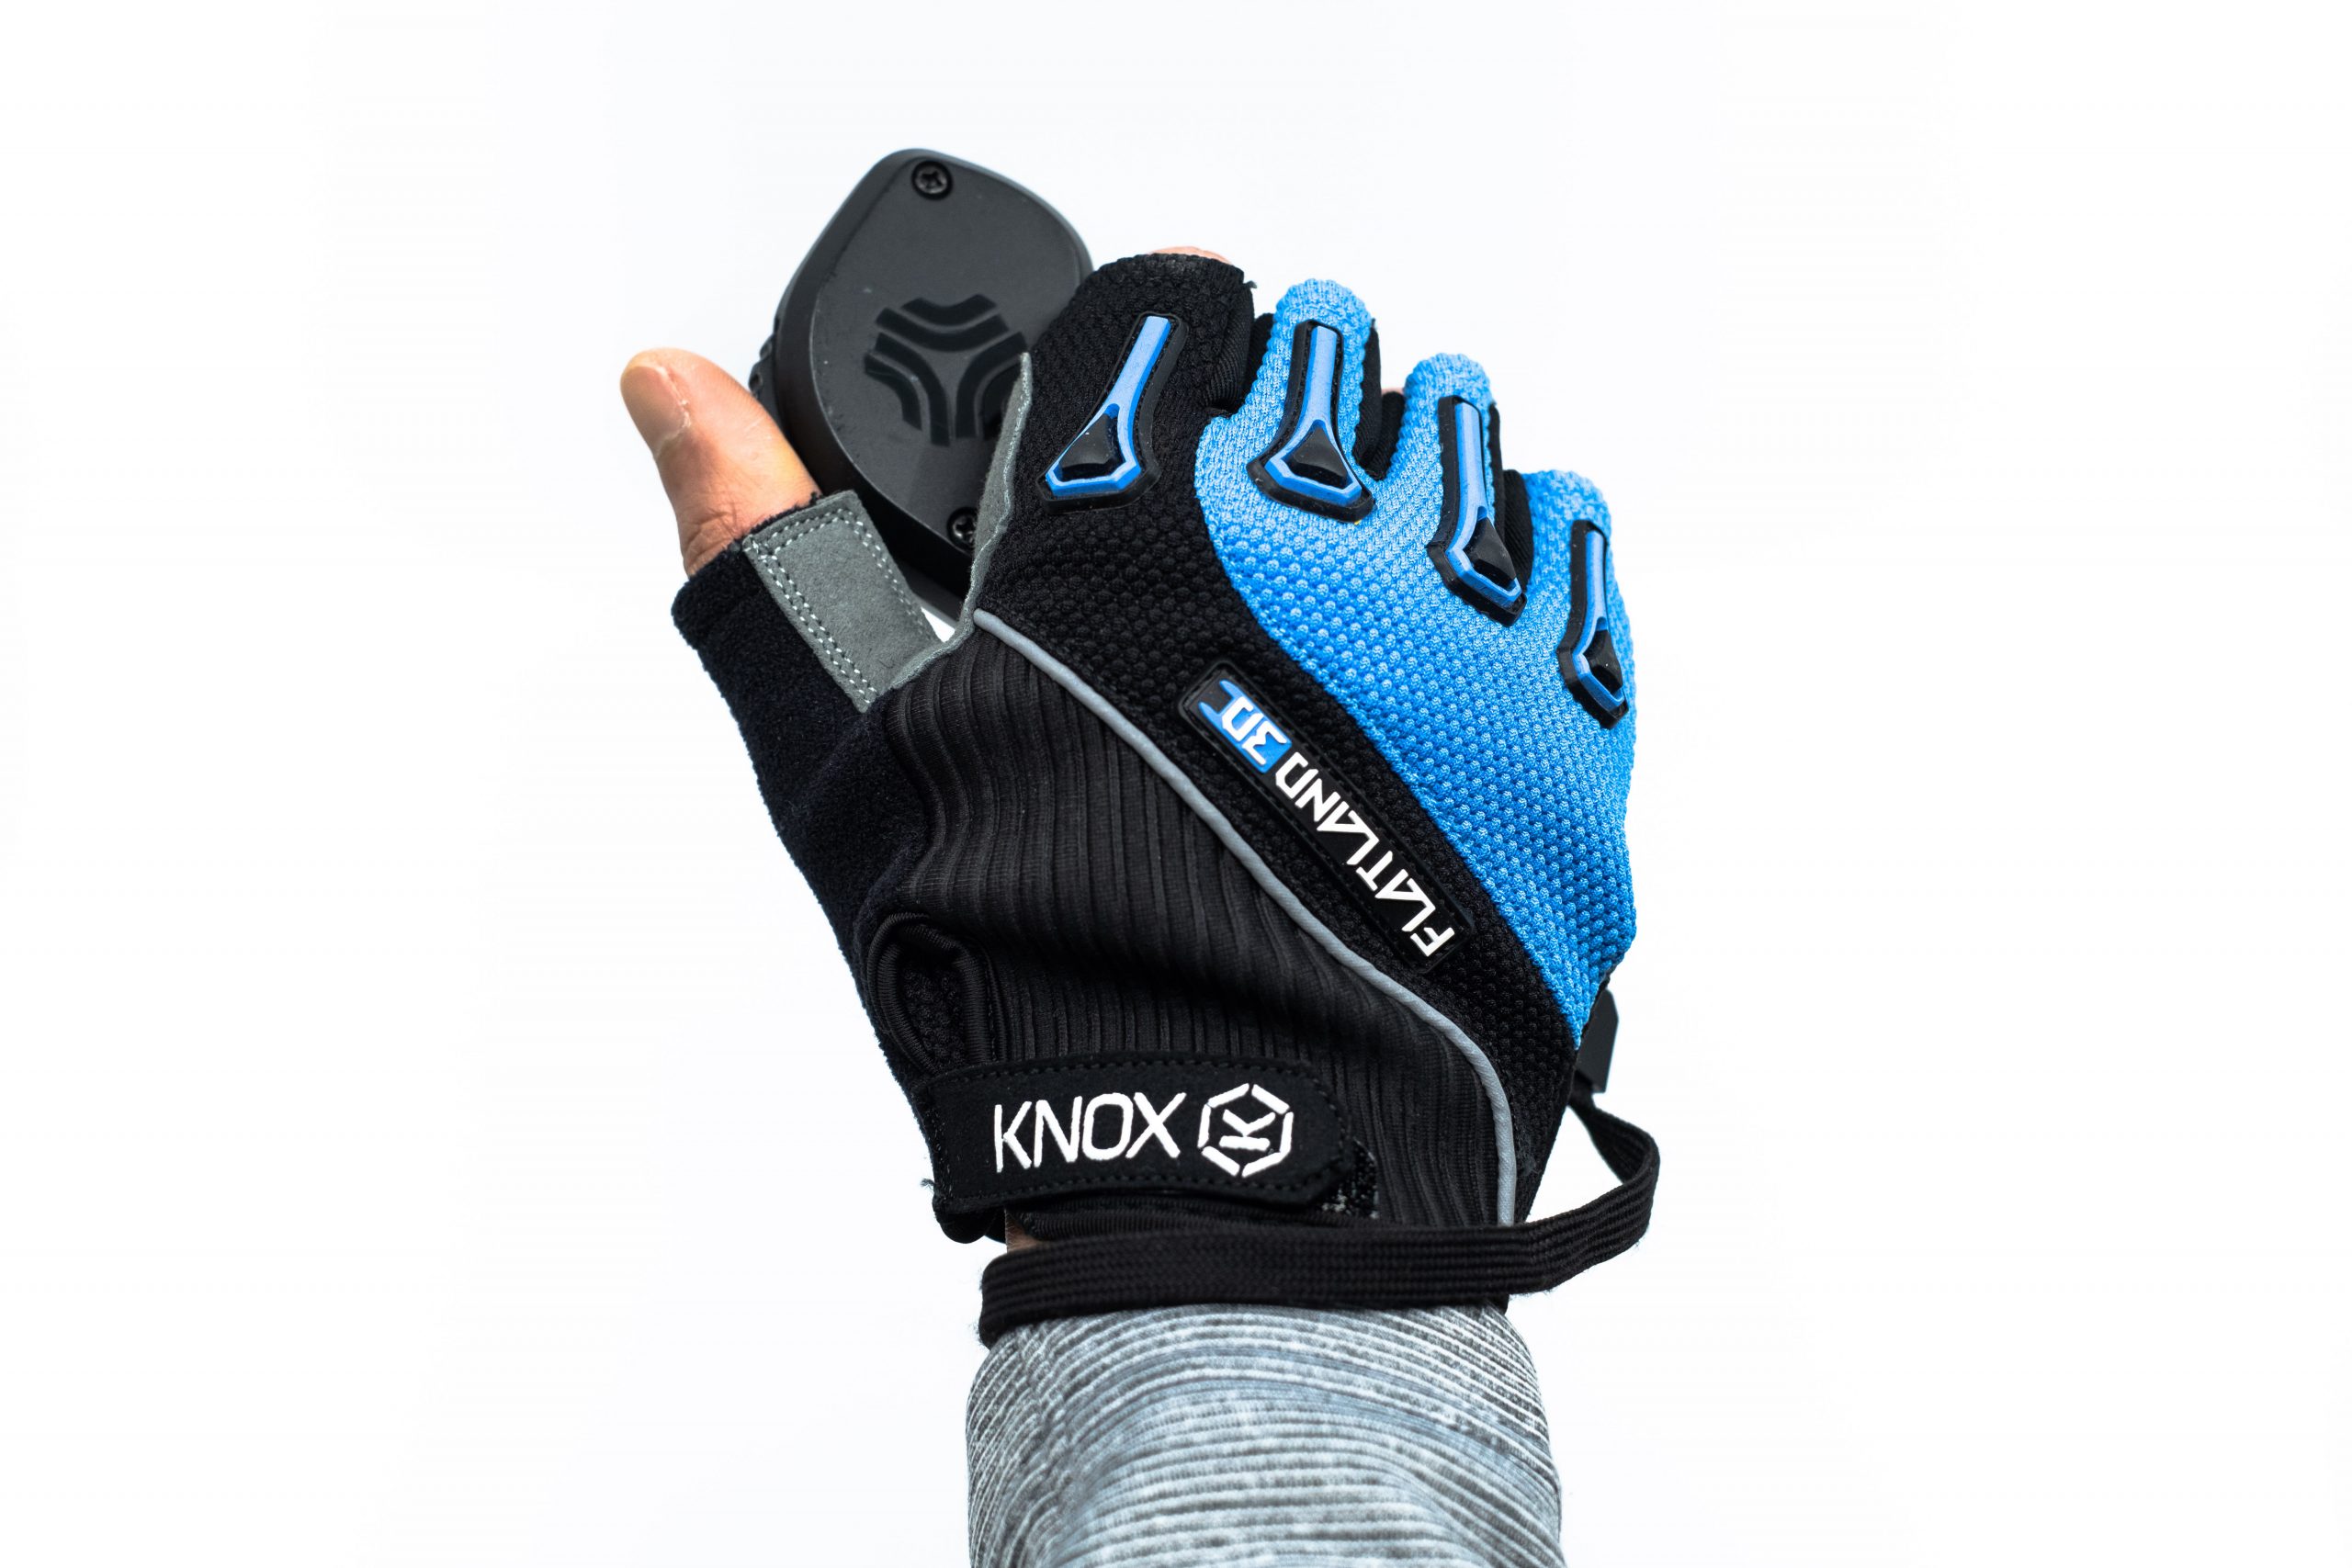 Fingerless Pro E-Skate Glove from flatland3d and Knox - electric  skateboarding glove